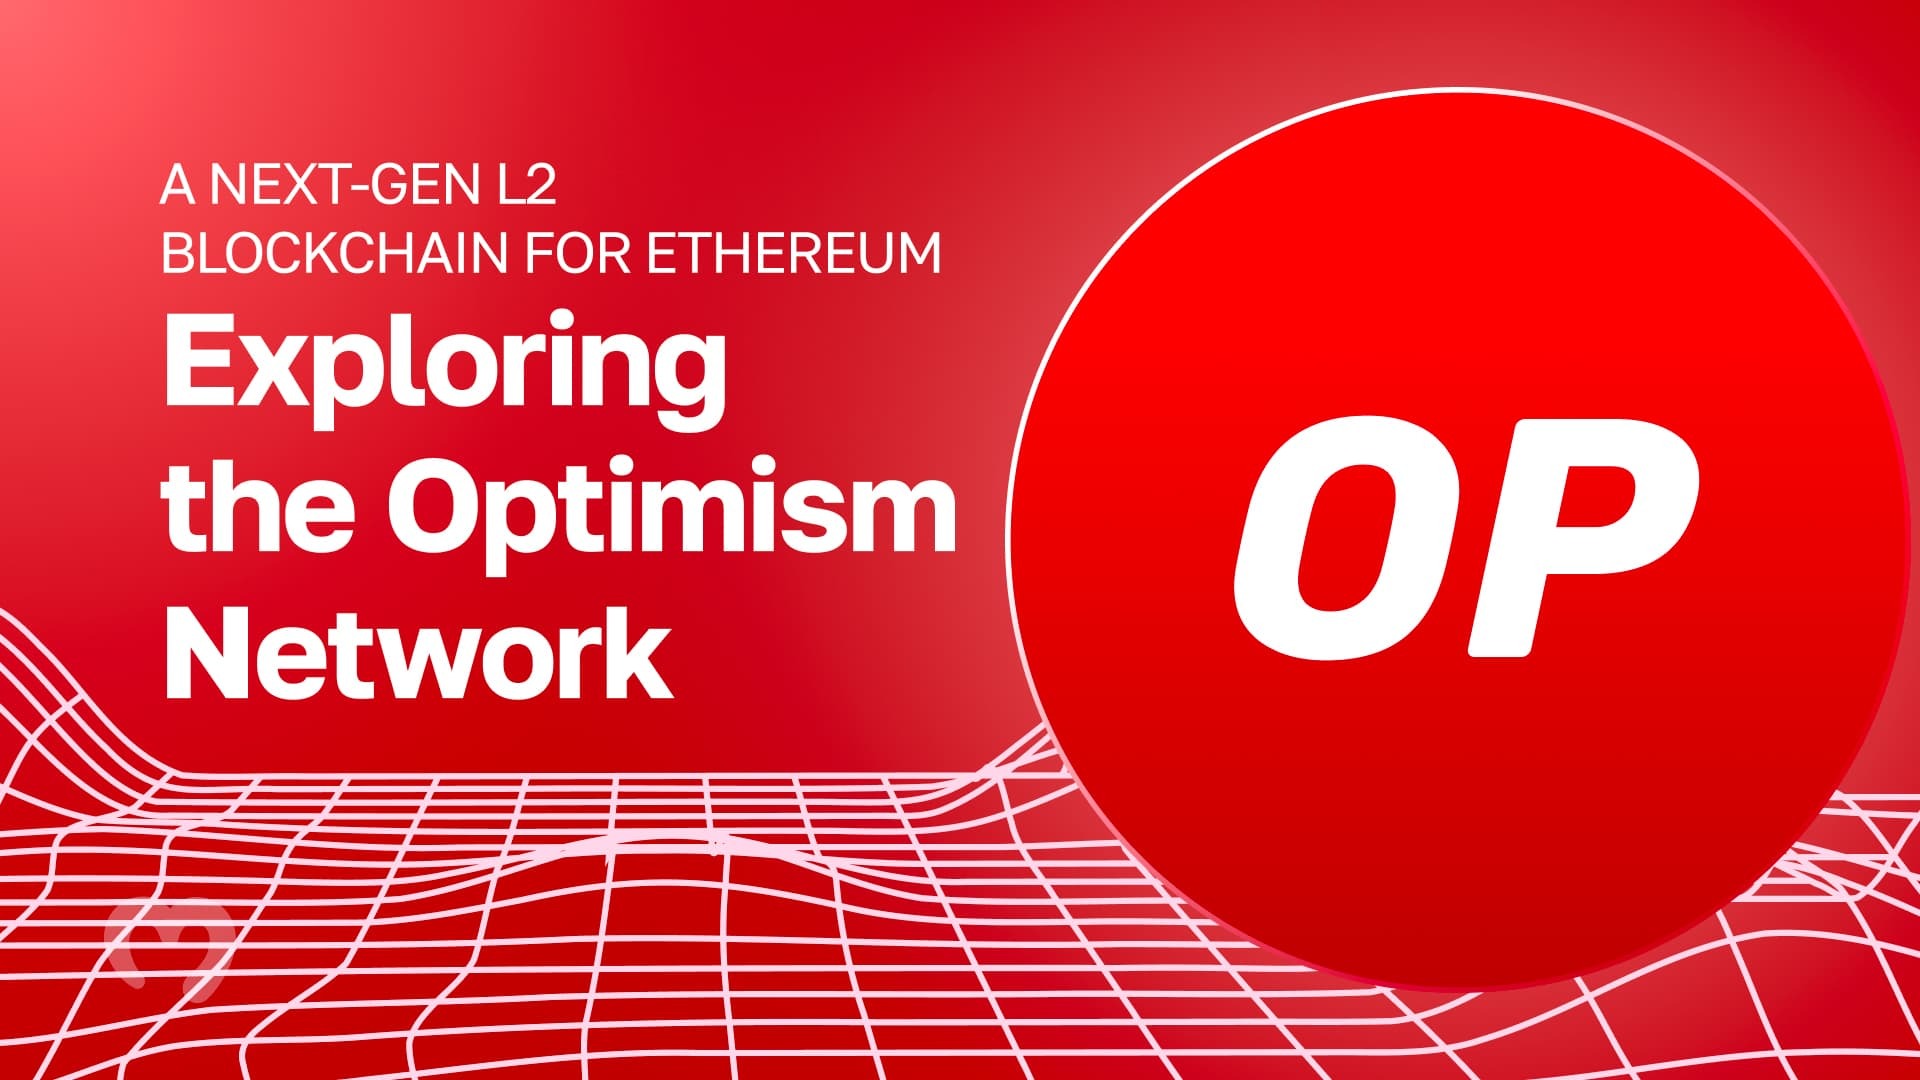 Exploring the Optimism Network - A Next-Gen L2 Blockchain for Ethereum